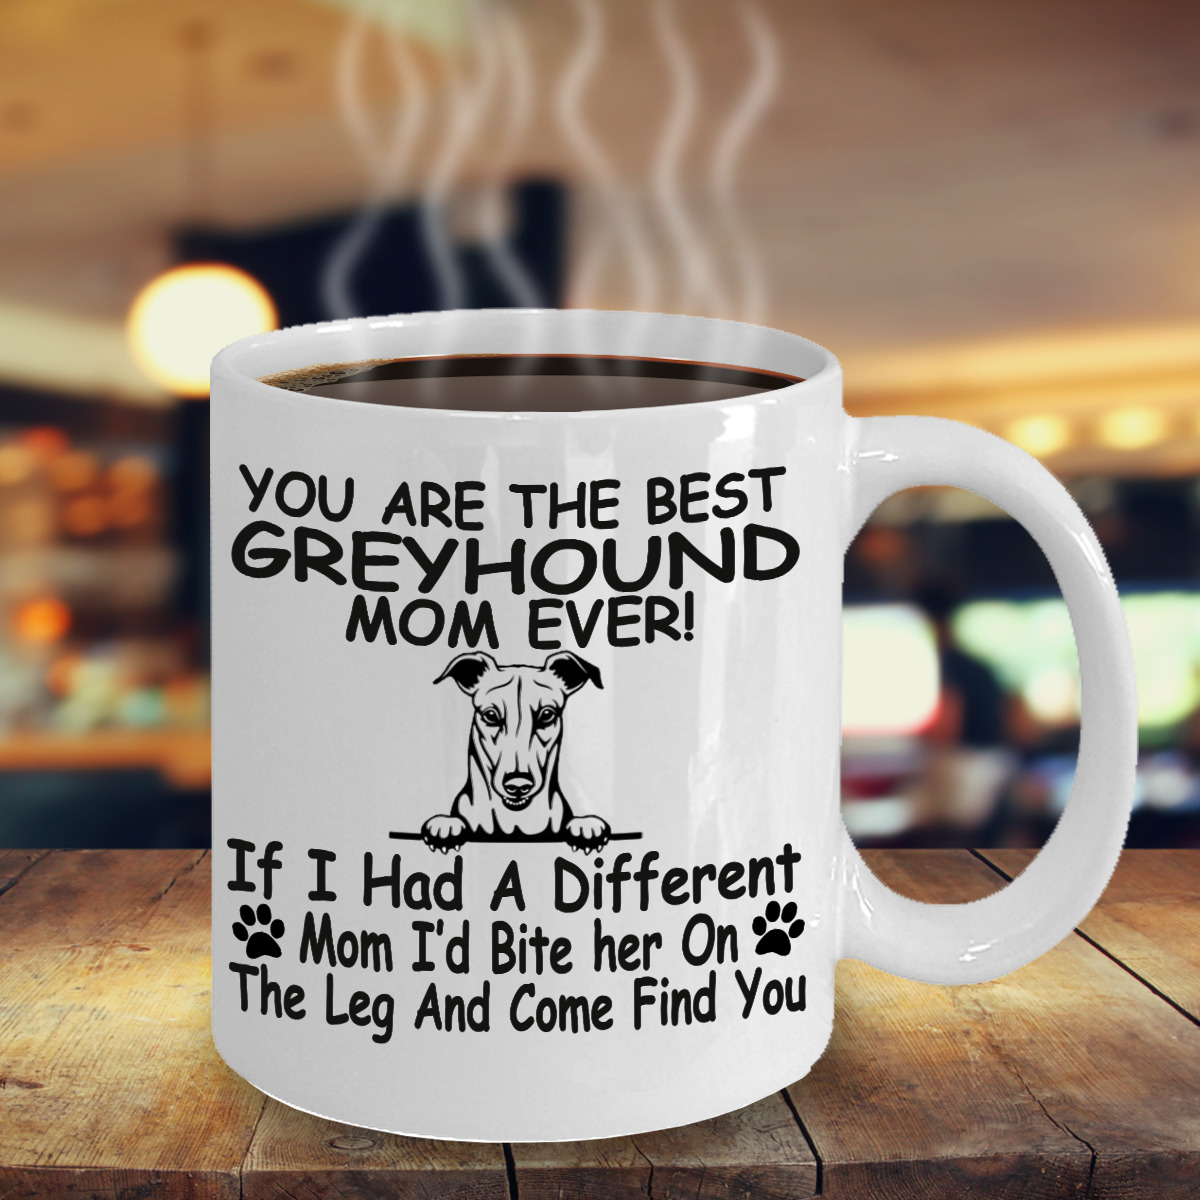 Greyhound Dog,English Greyhound,Greyhounds,sighthound,Greyhounds Dog,Cups,Mugs